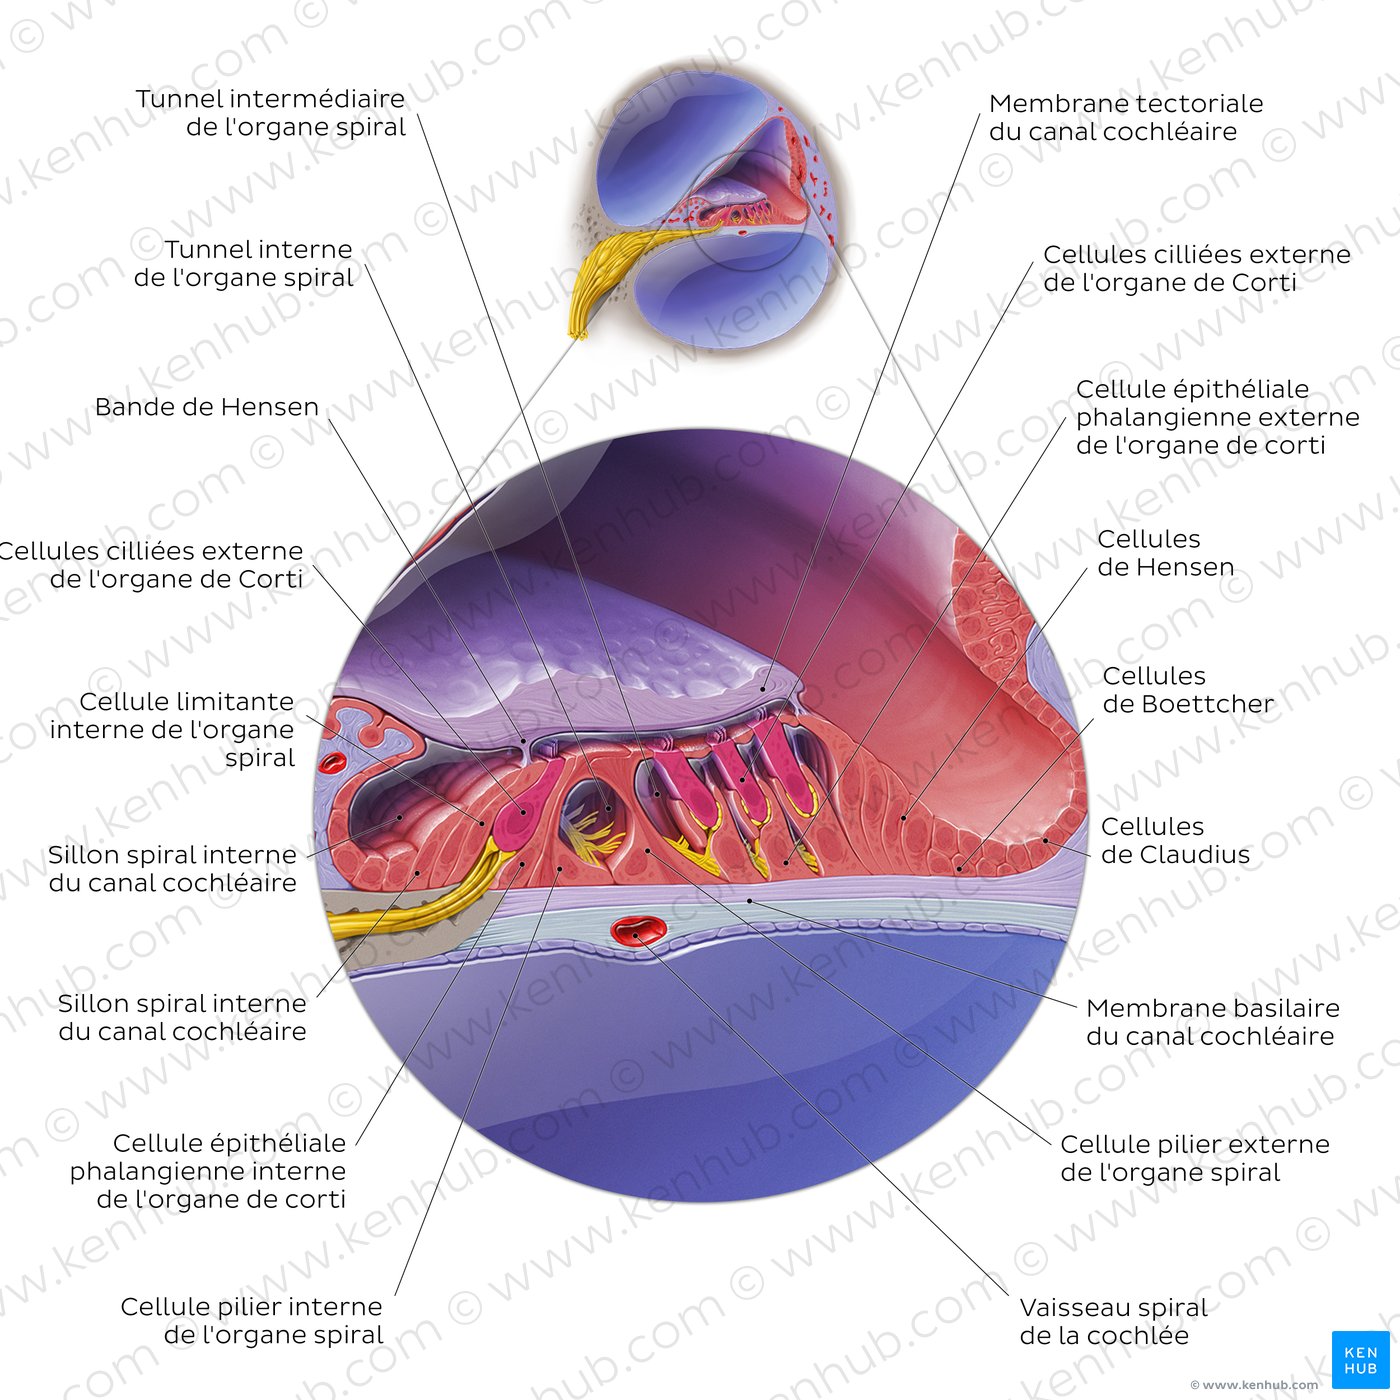 Anatomie de l'organe spiral de Corti en coupe transversale (schéma)